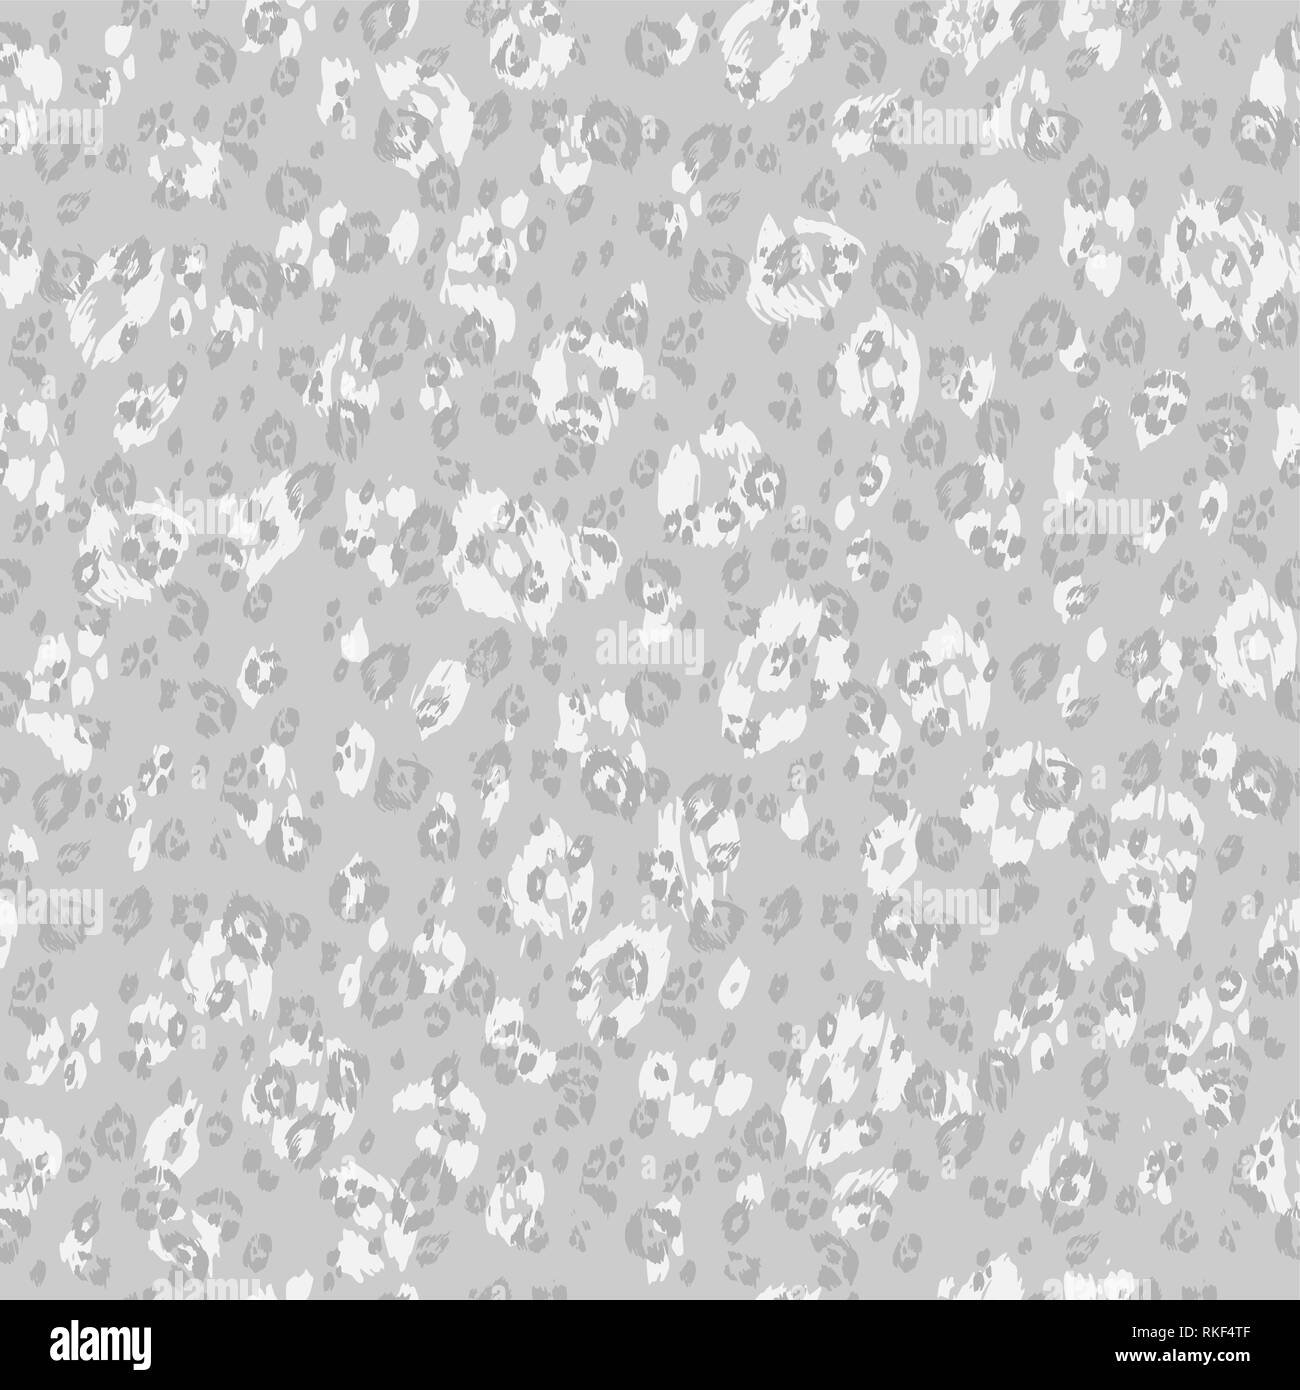 Animal abstract monochrome texture. Spotterd seamless pattern. Stock Vector